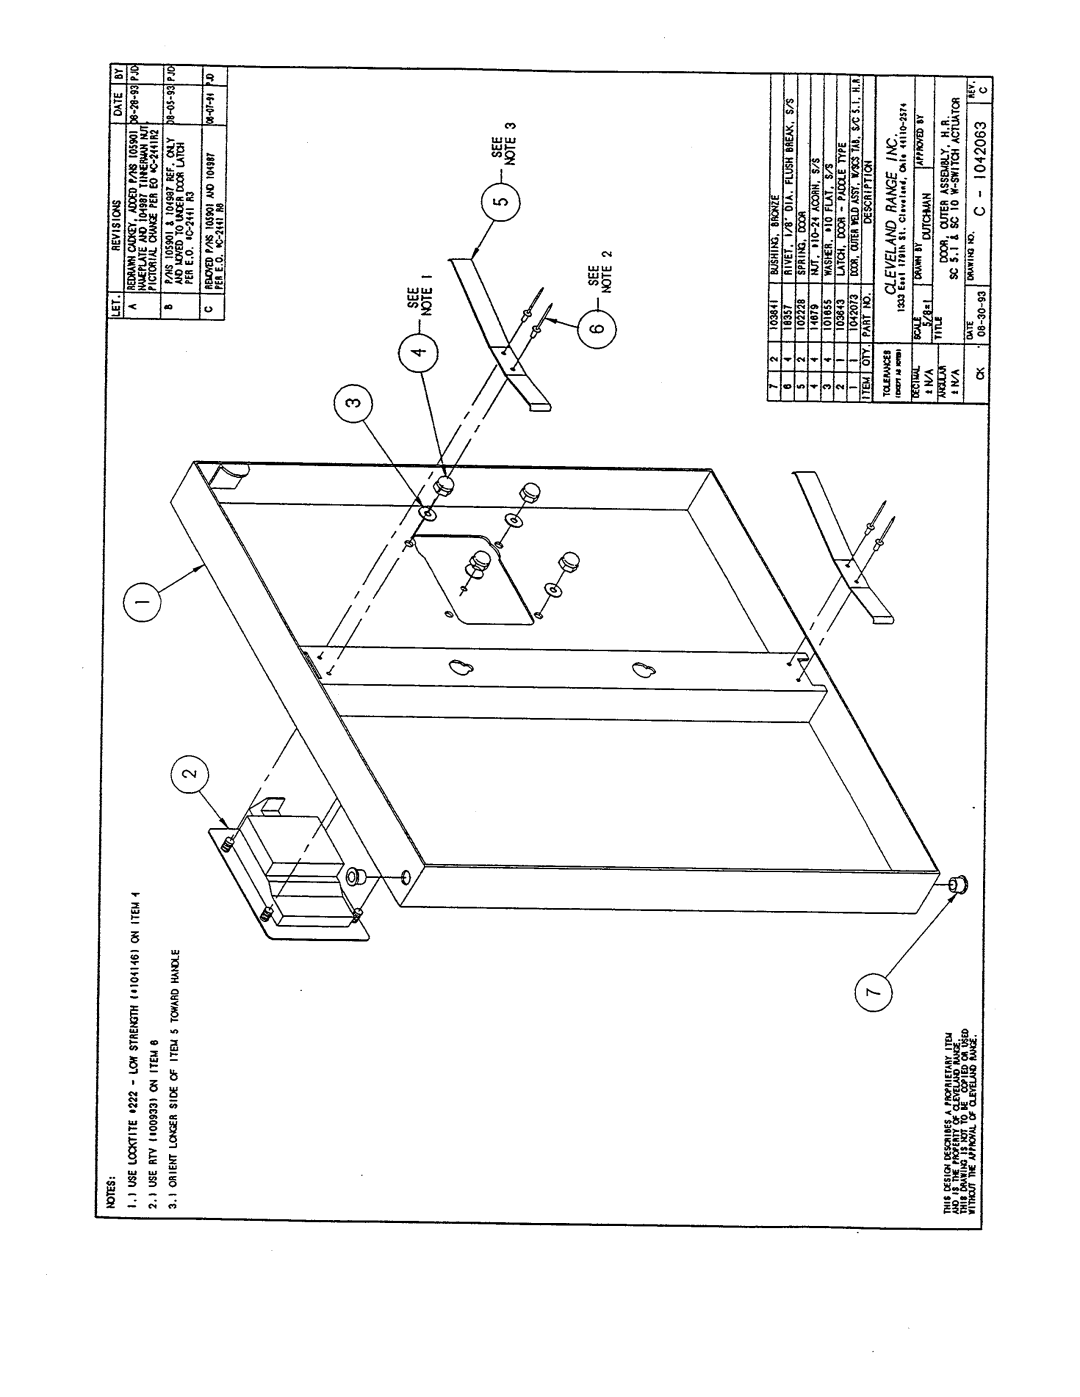 Cleveland Range 24-CGP-10 manual 